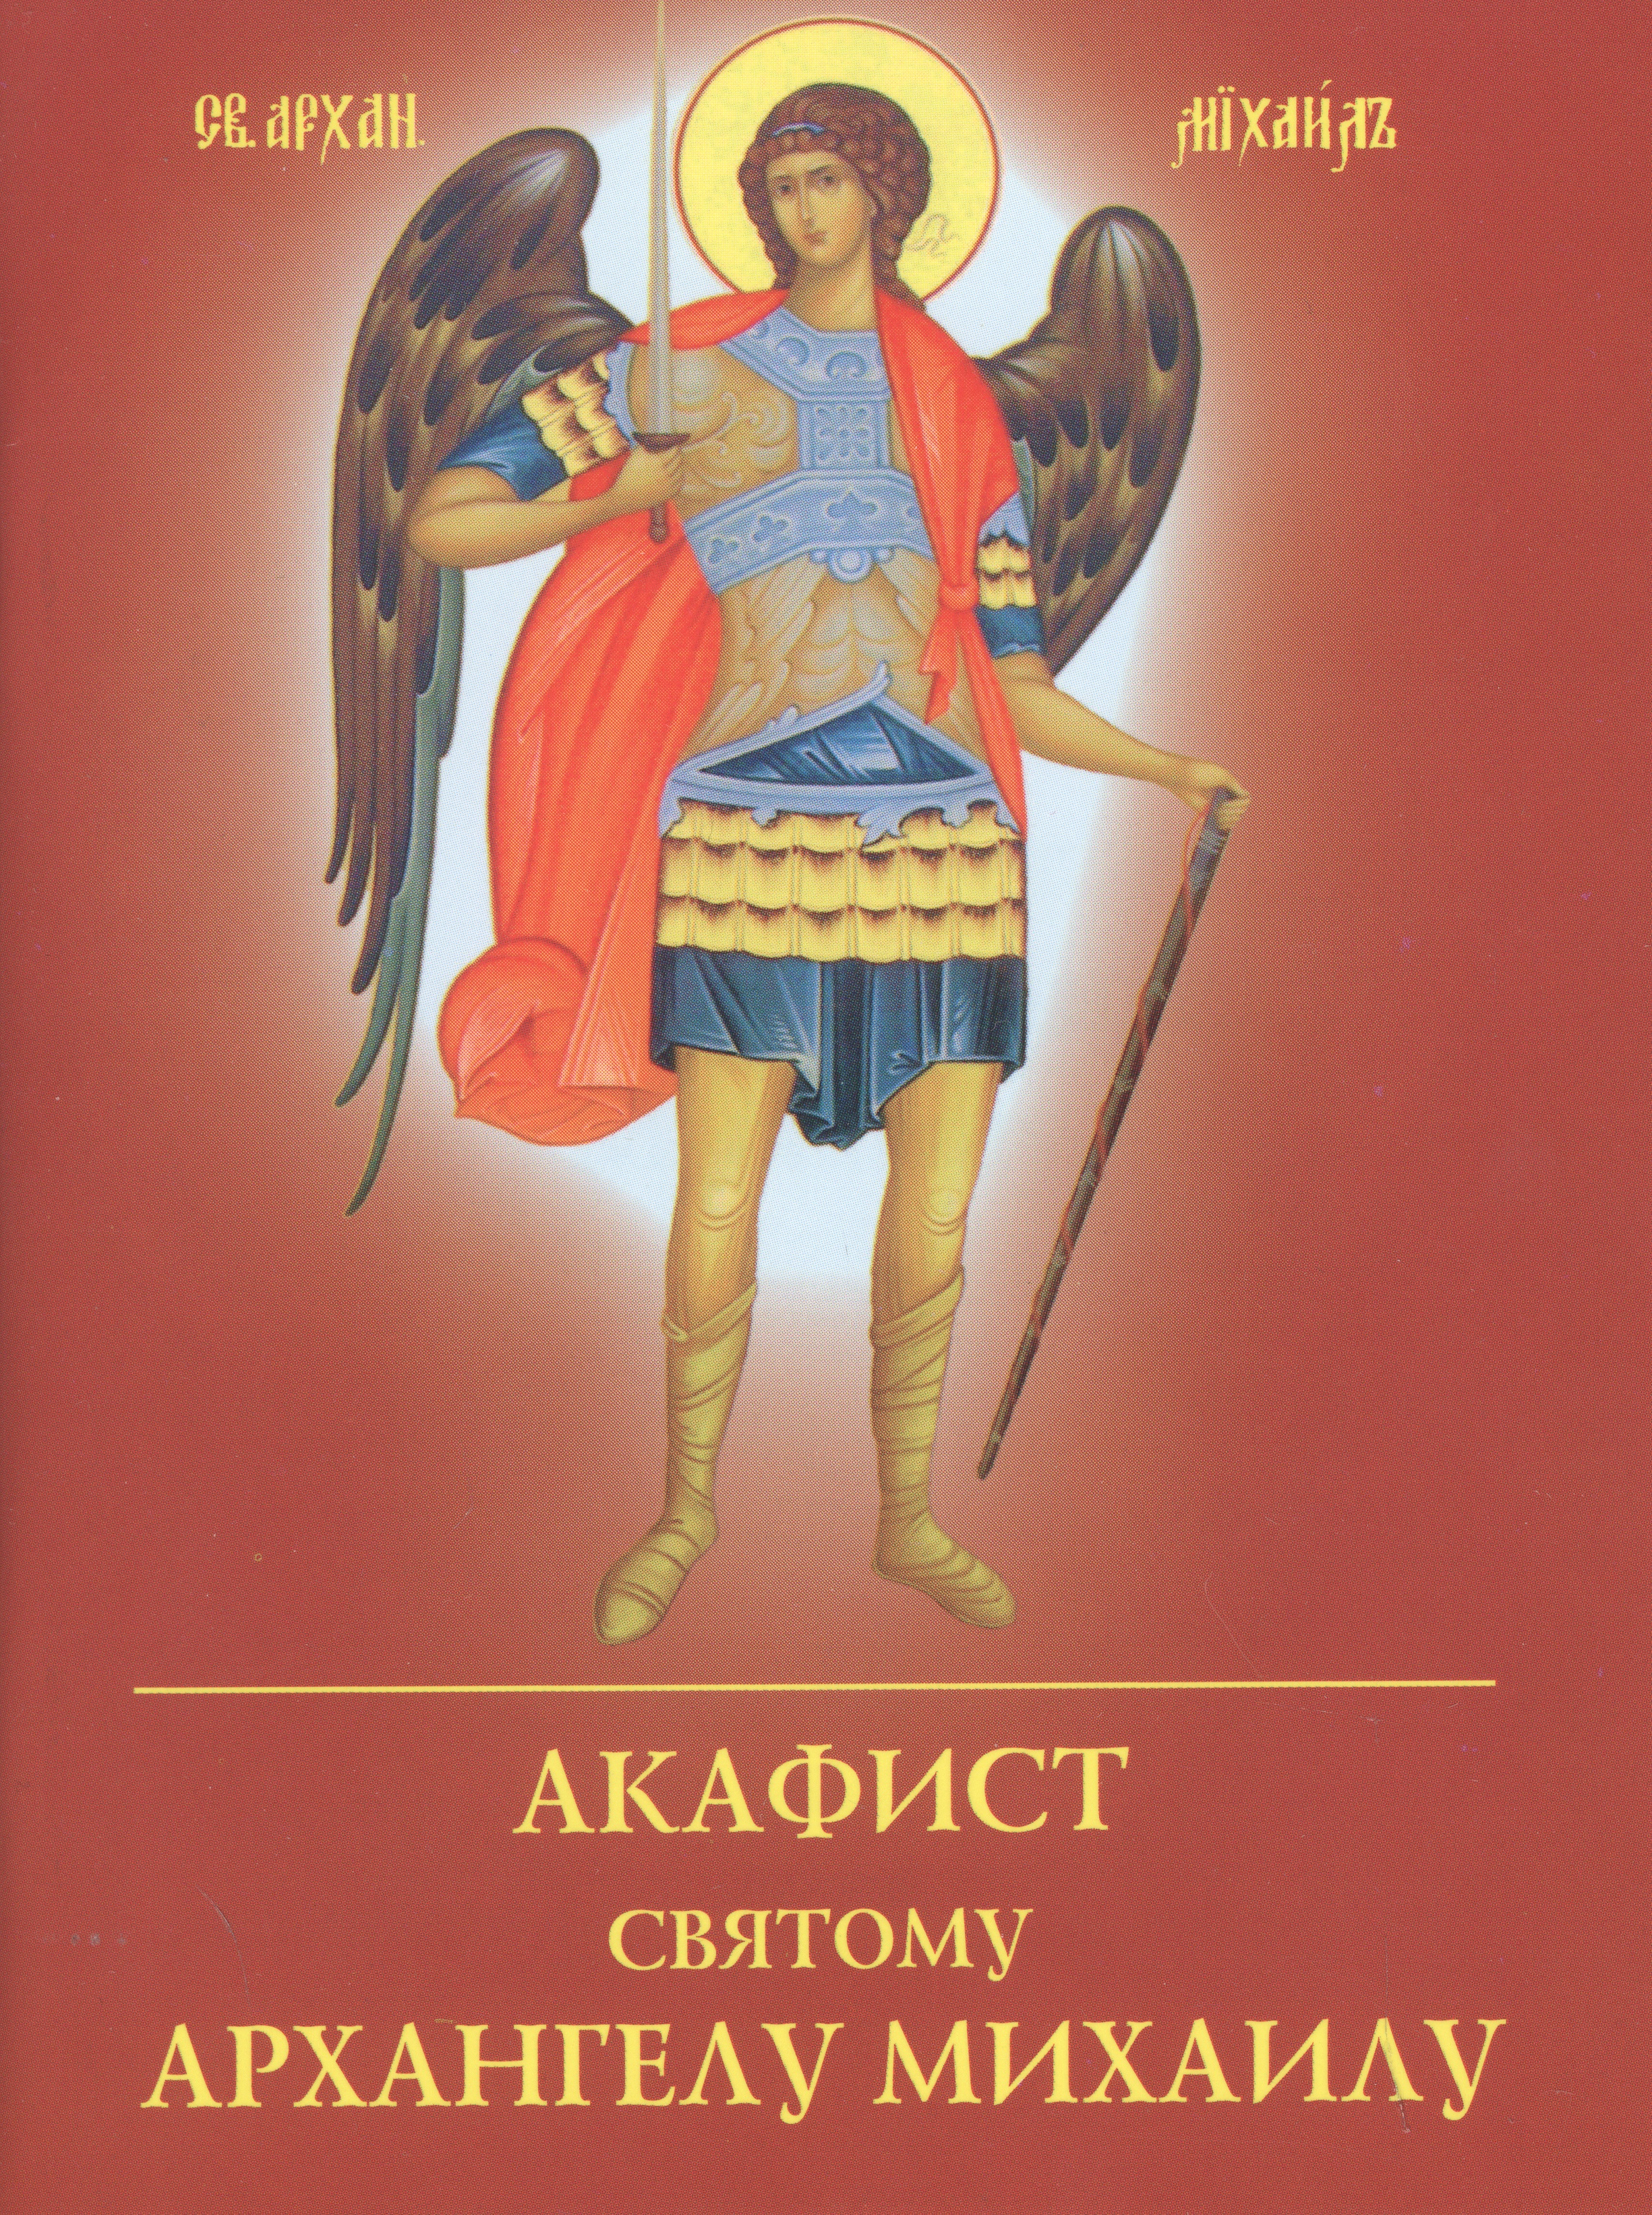 Акафист Архангелу Михаилу акафист святому архангелу михаилу на церковнославянском языке